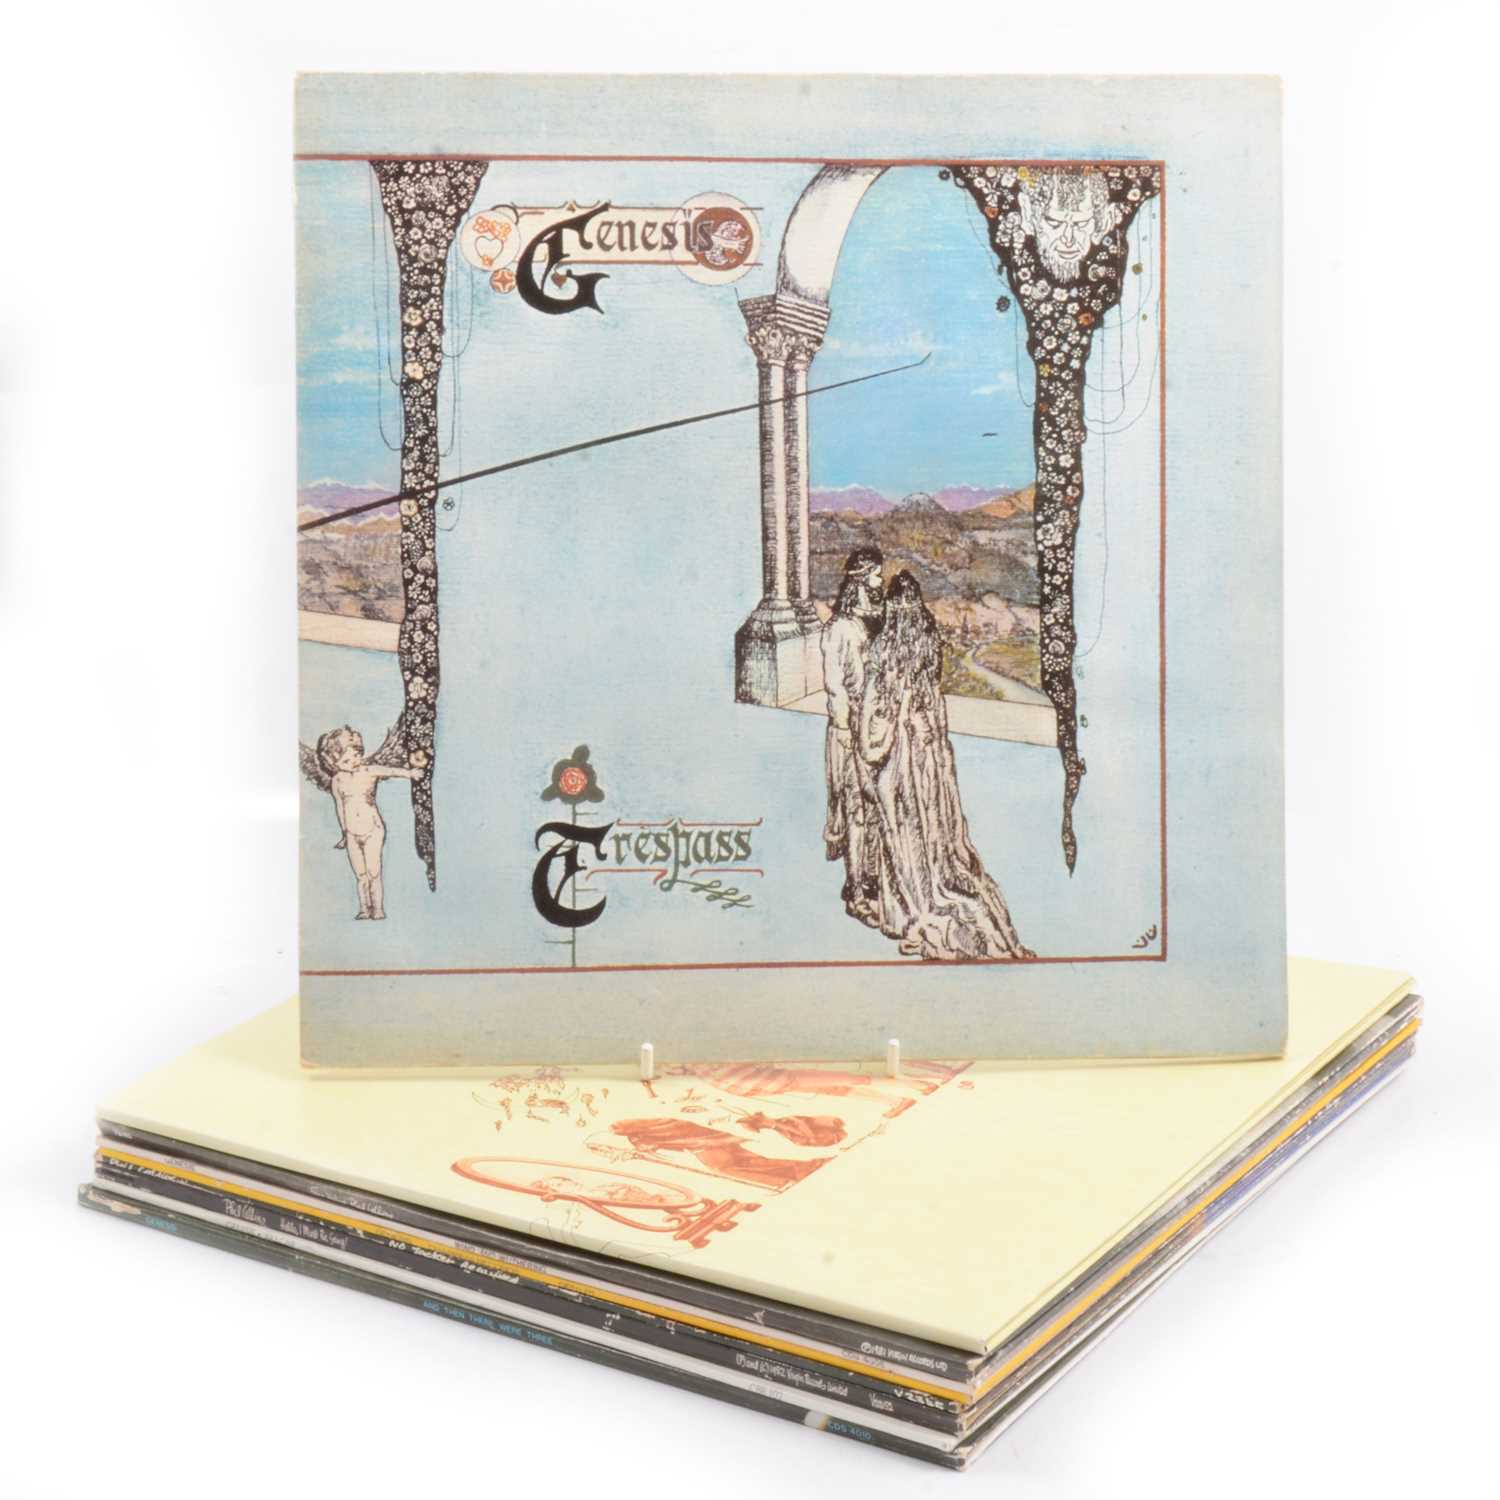 Lot 219 - Nine Genesis / Phil Collins LP vinyl records